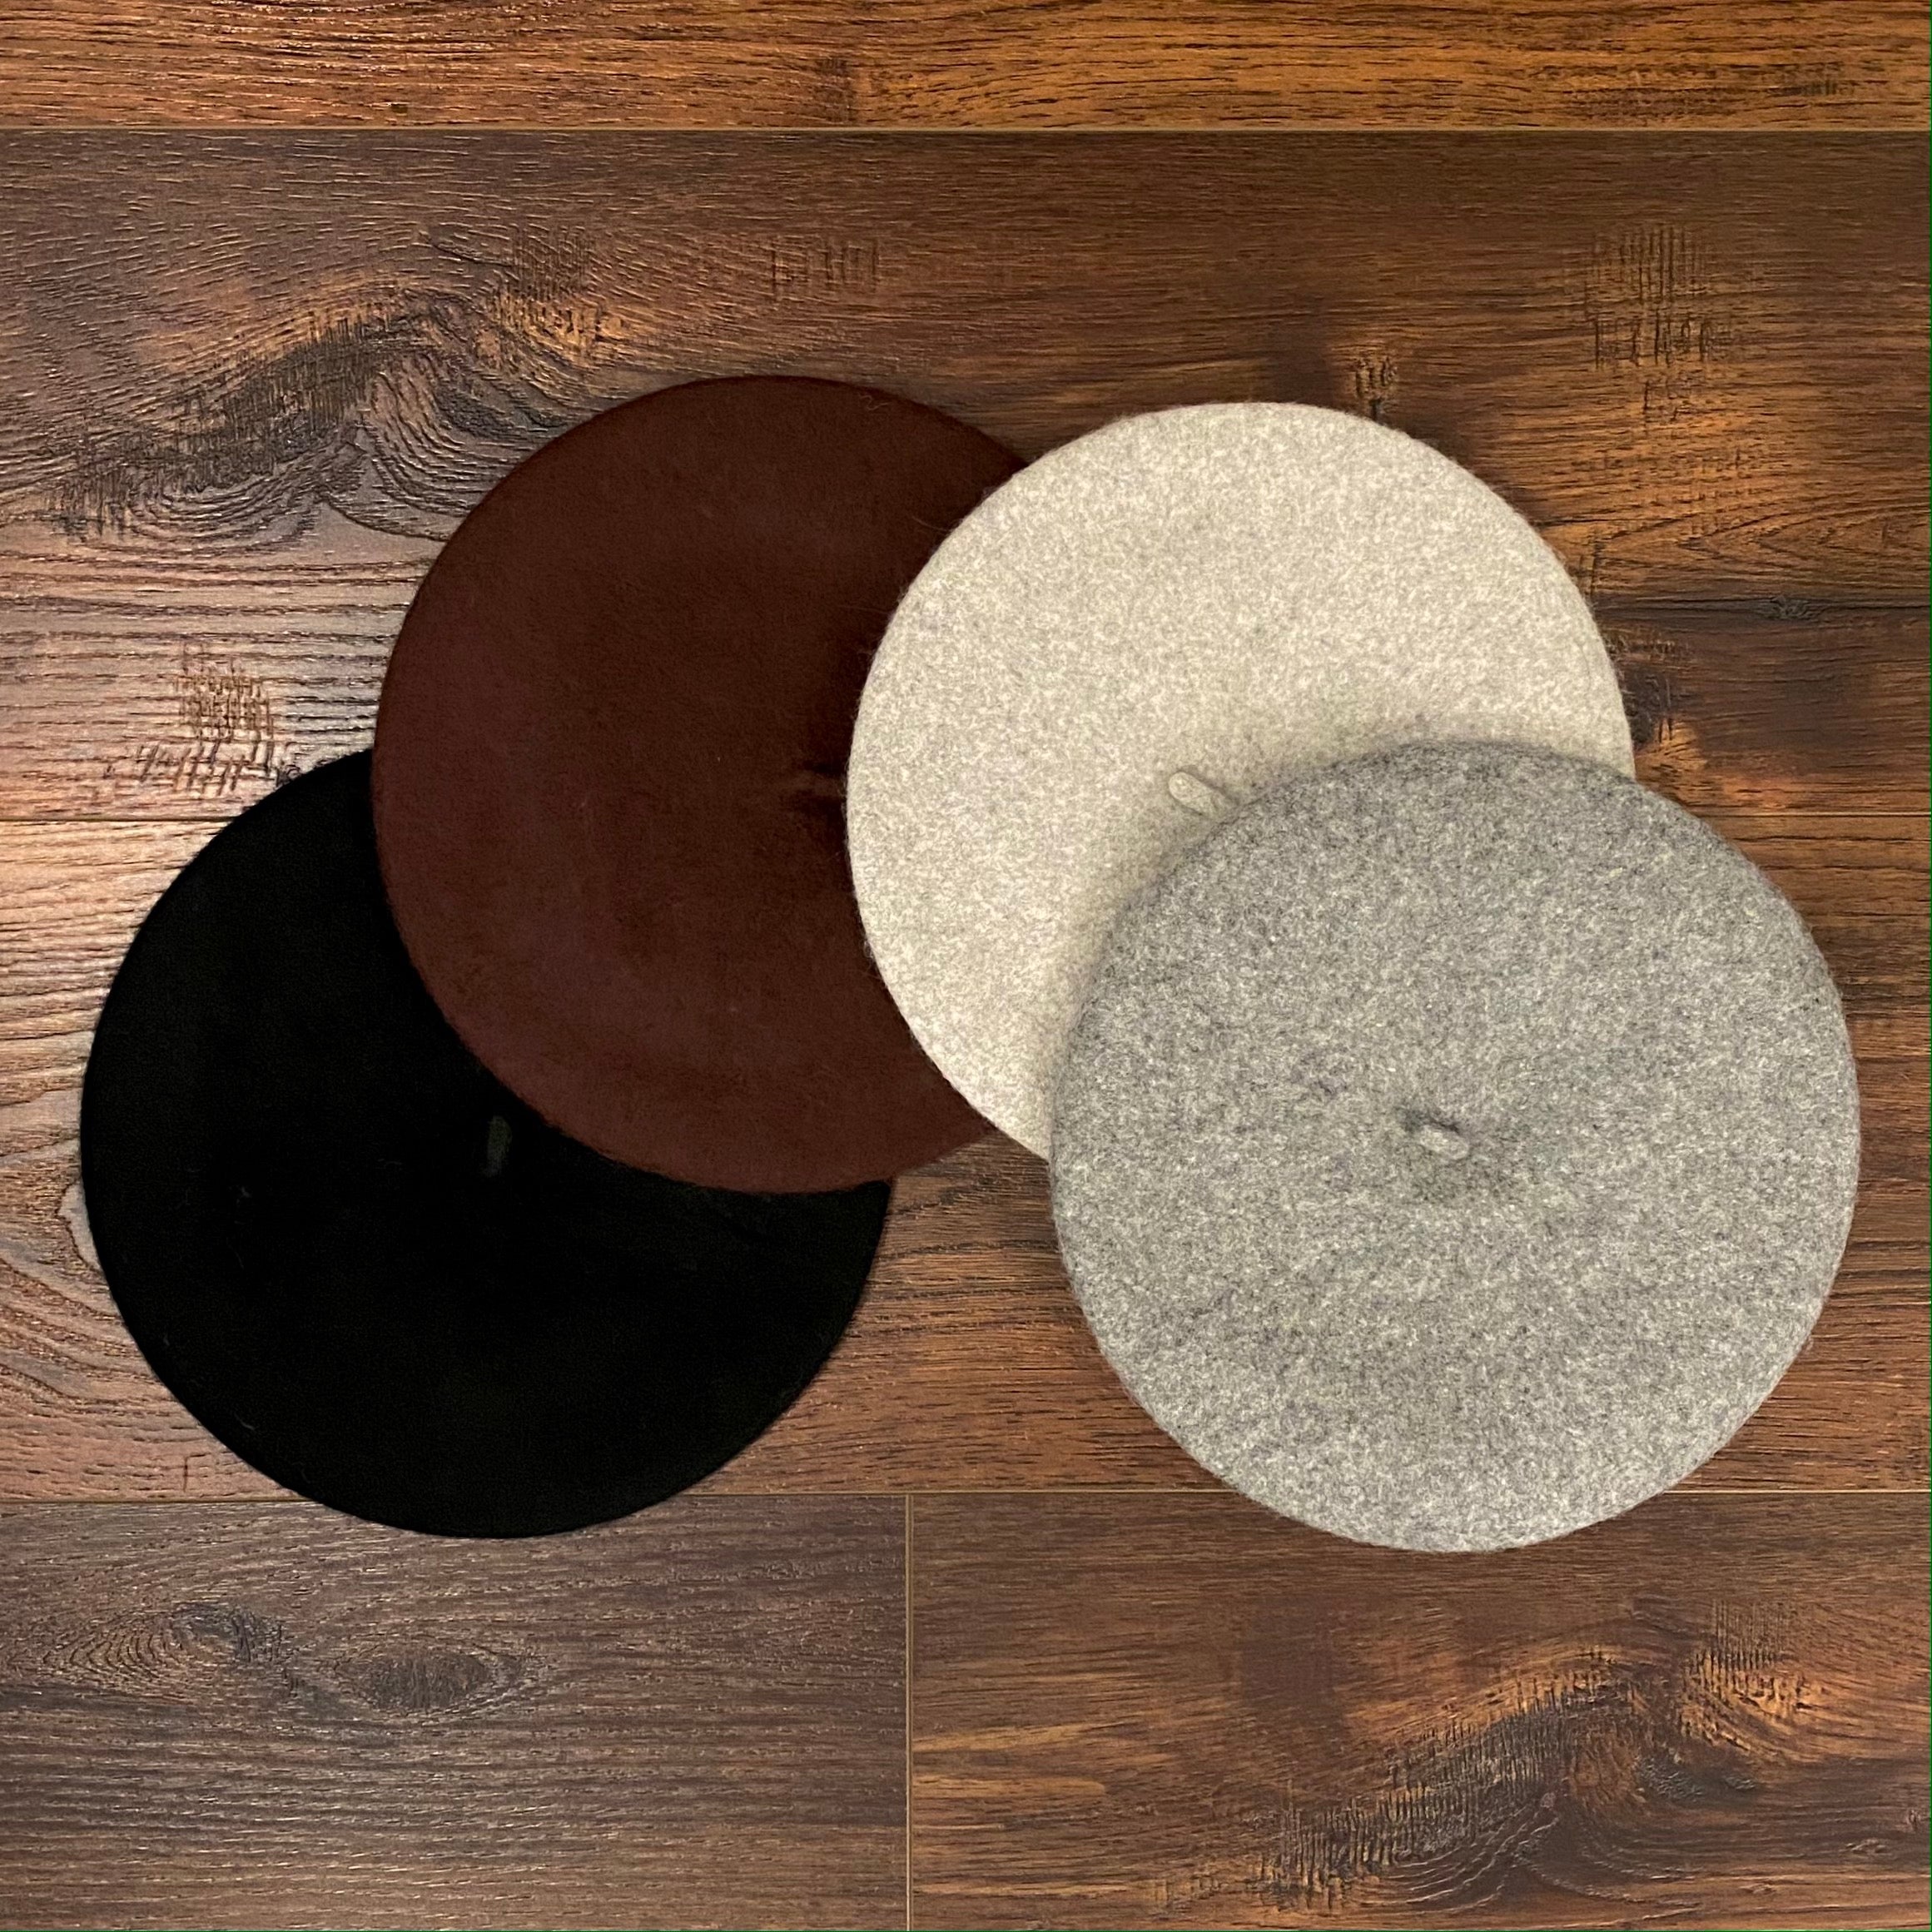 Wool Blend Felt Tam O'Shanter - Scottish Bonnet, Beret Hat - Now in 5 Colors!